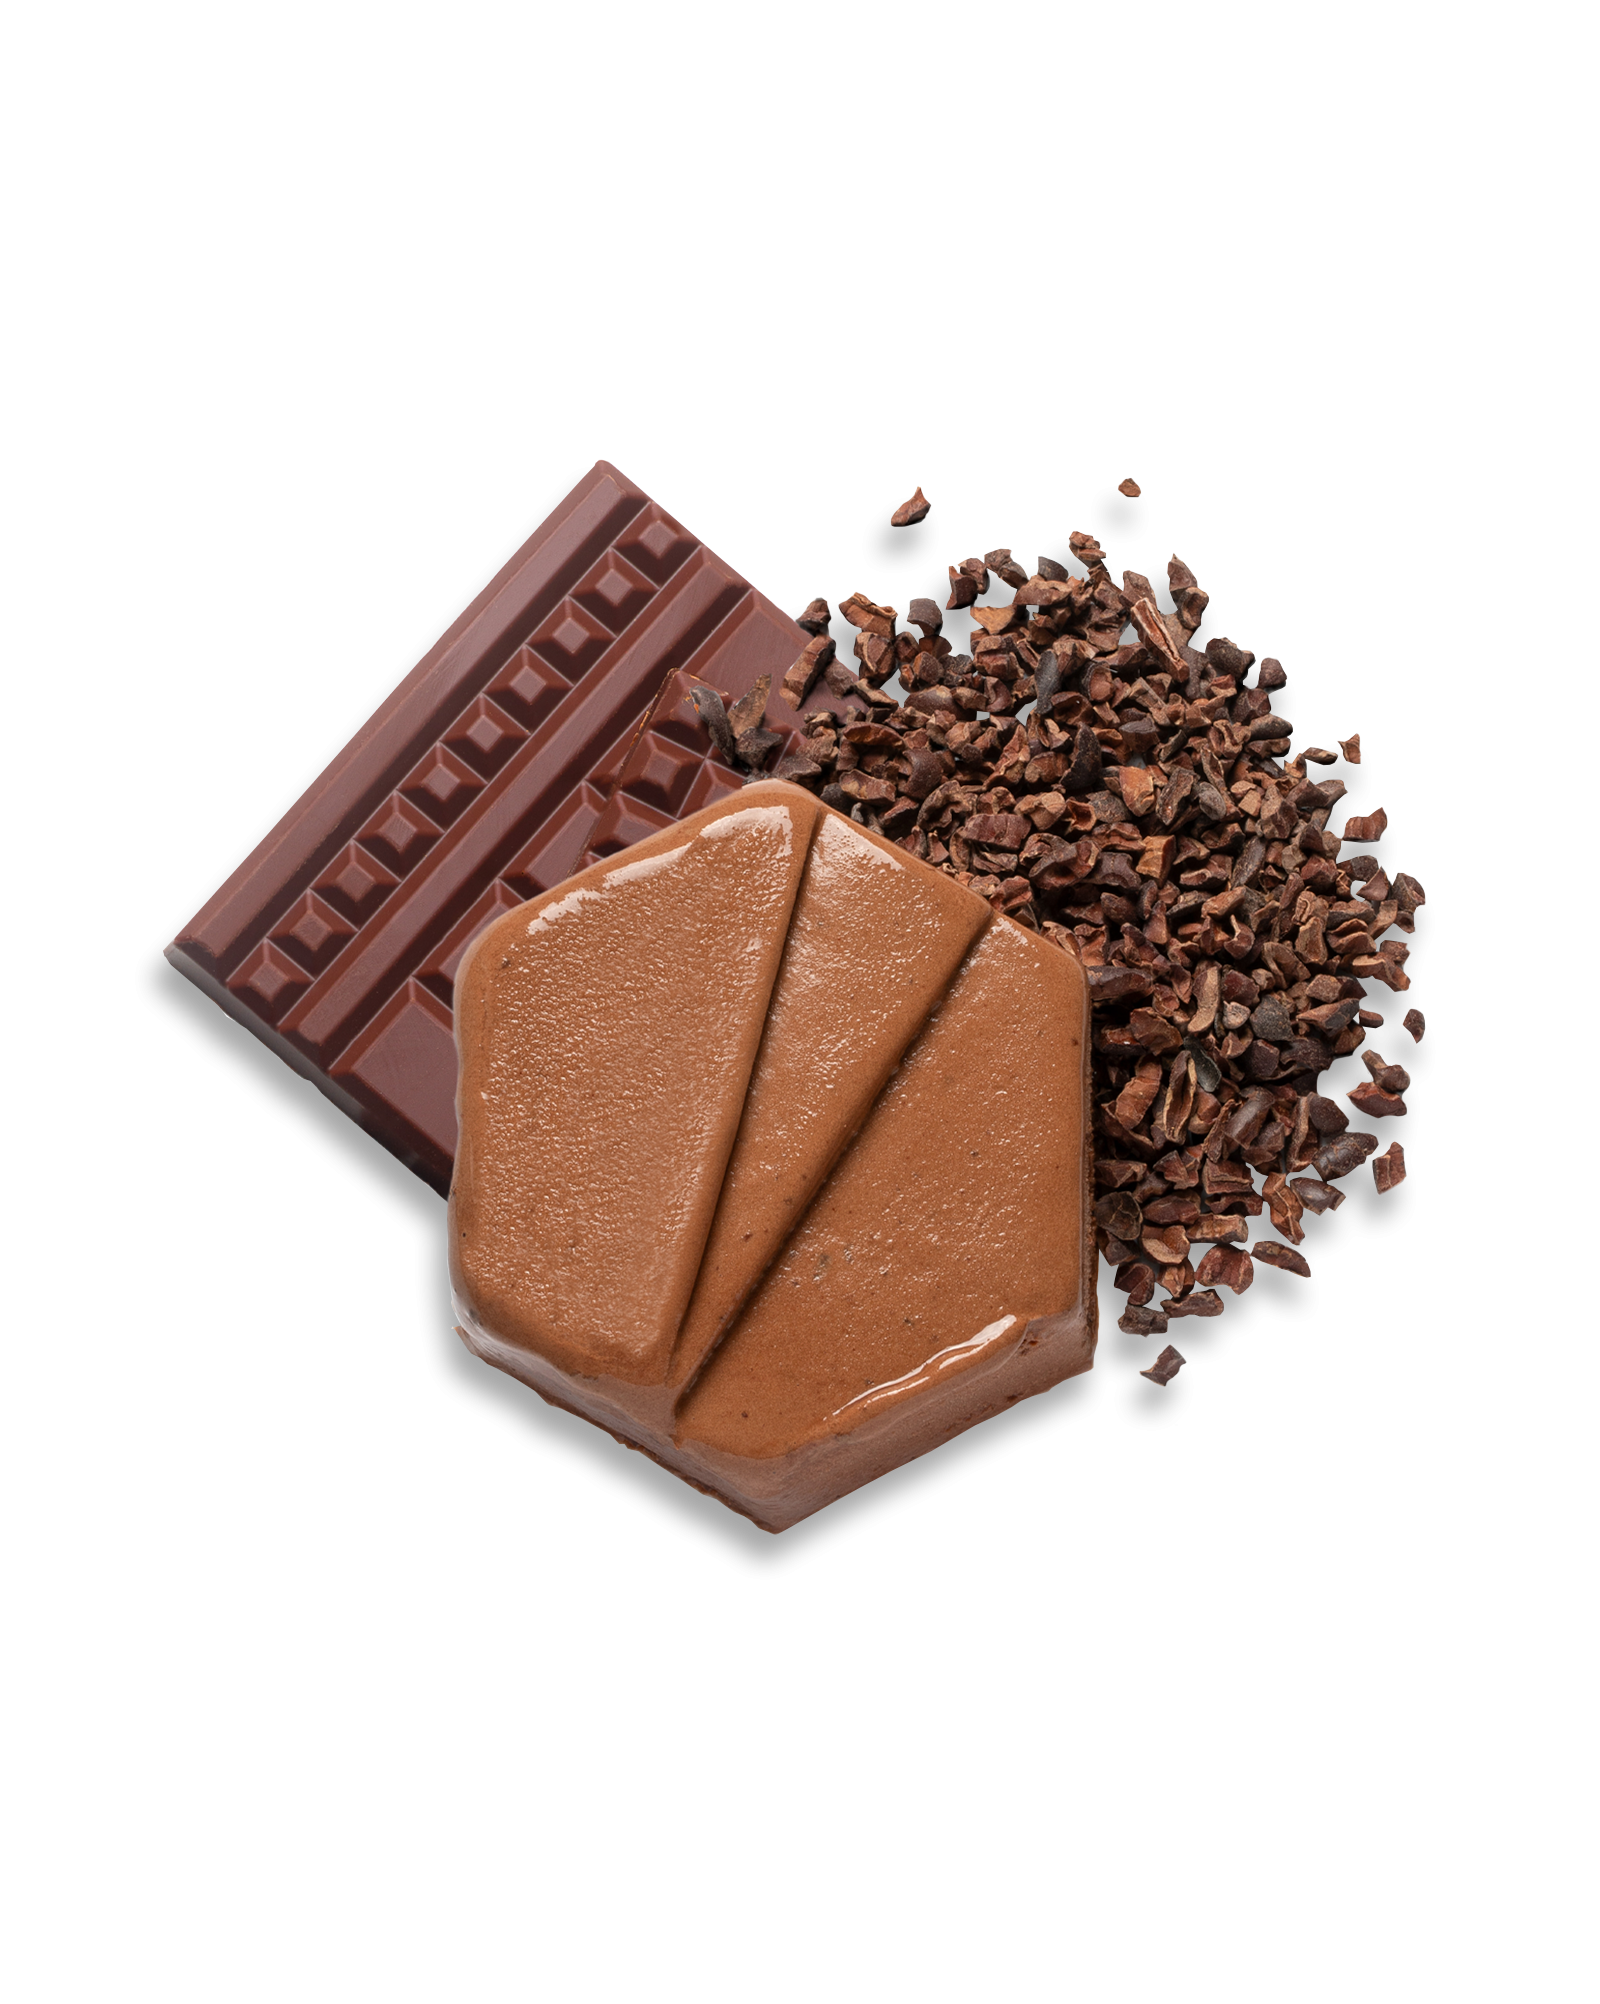 Sorbet chocolat Madagascar